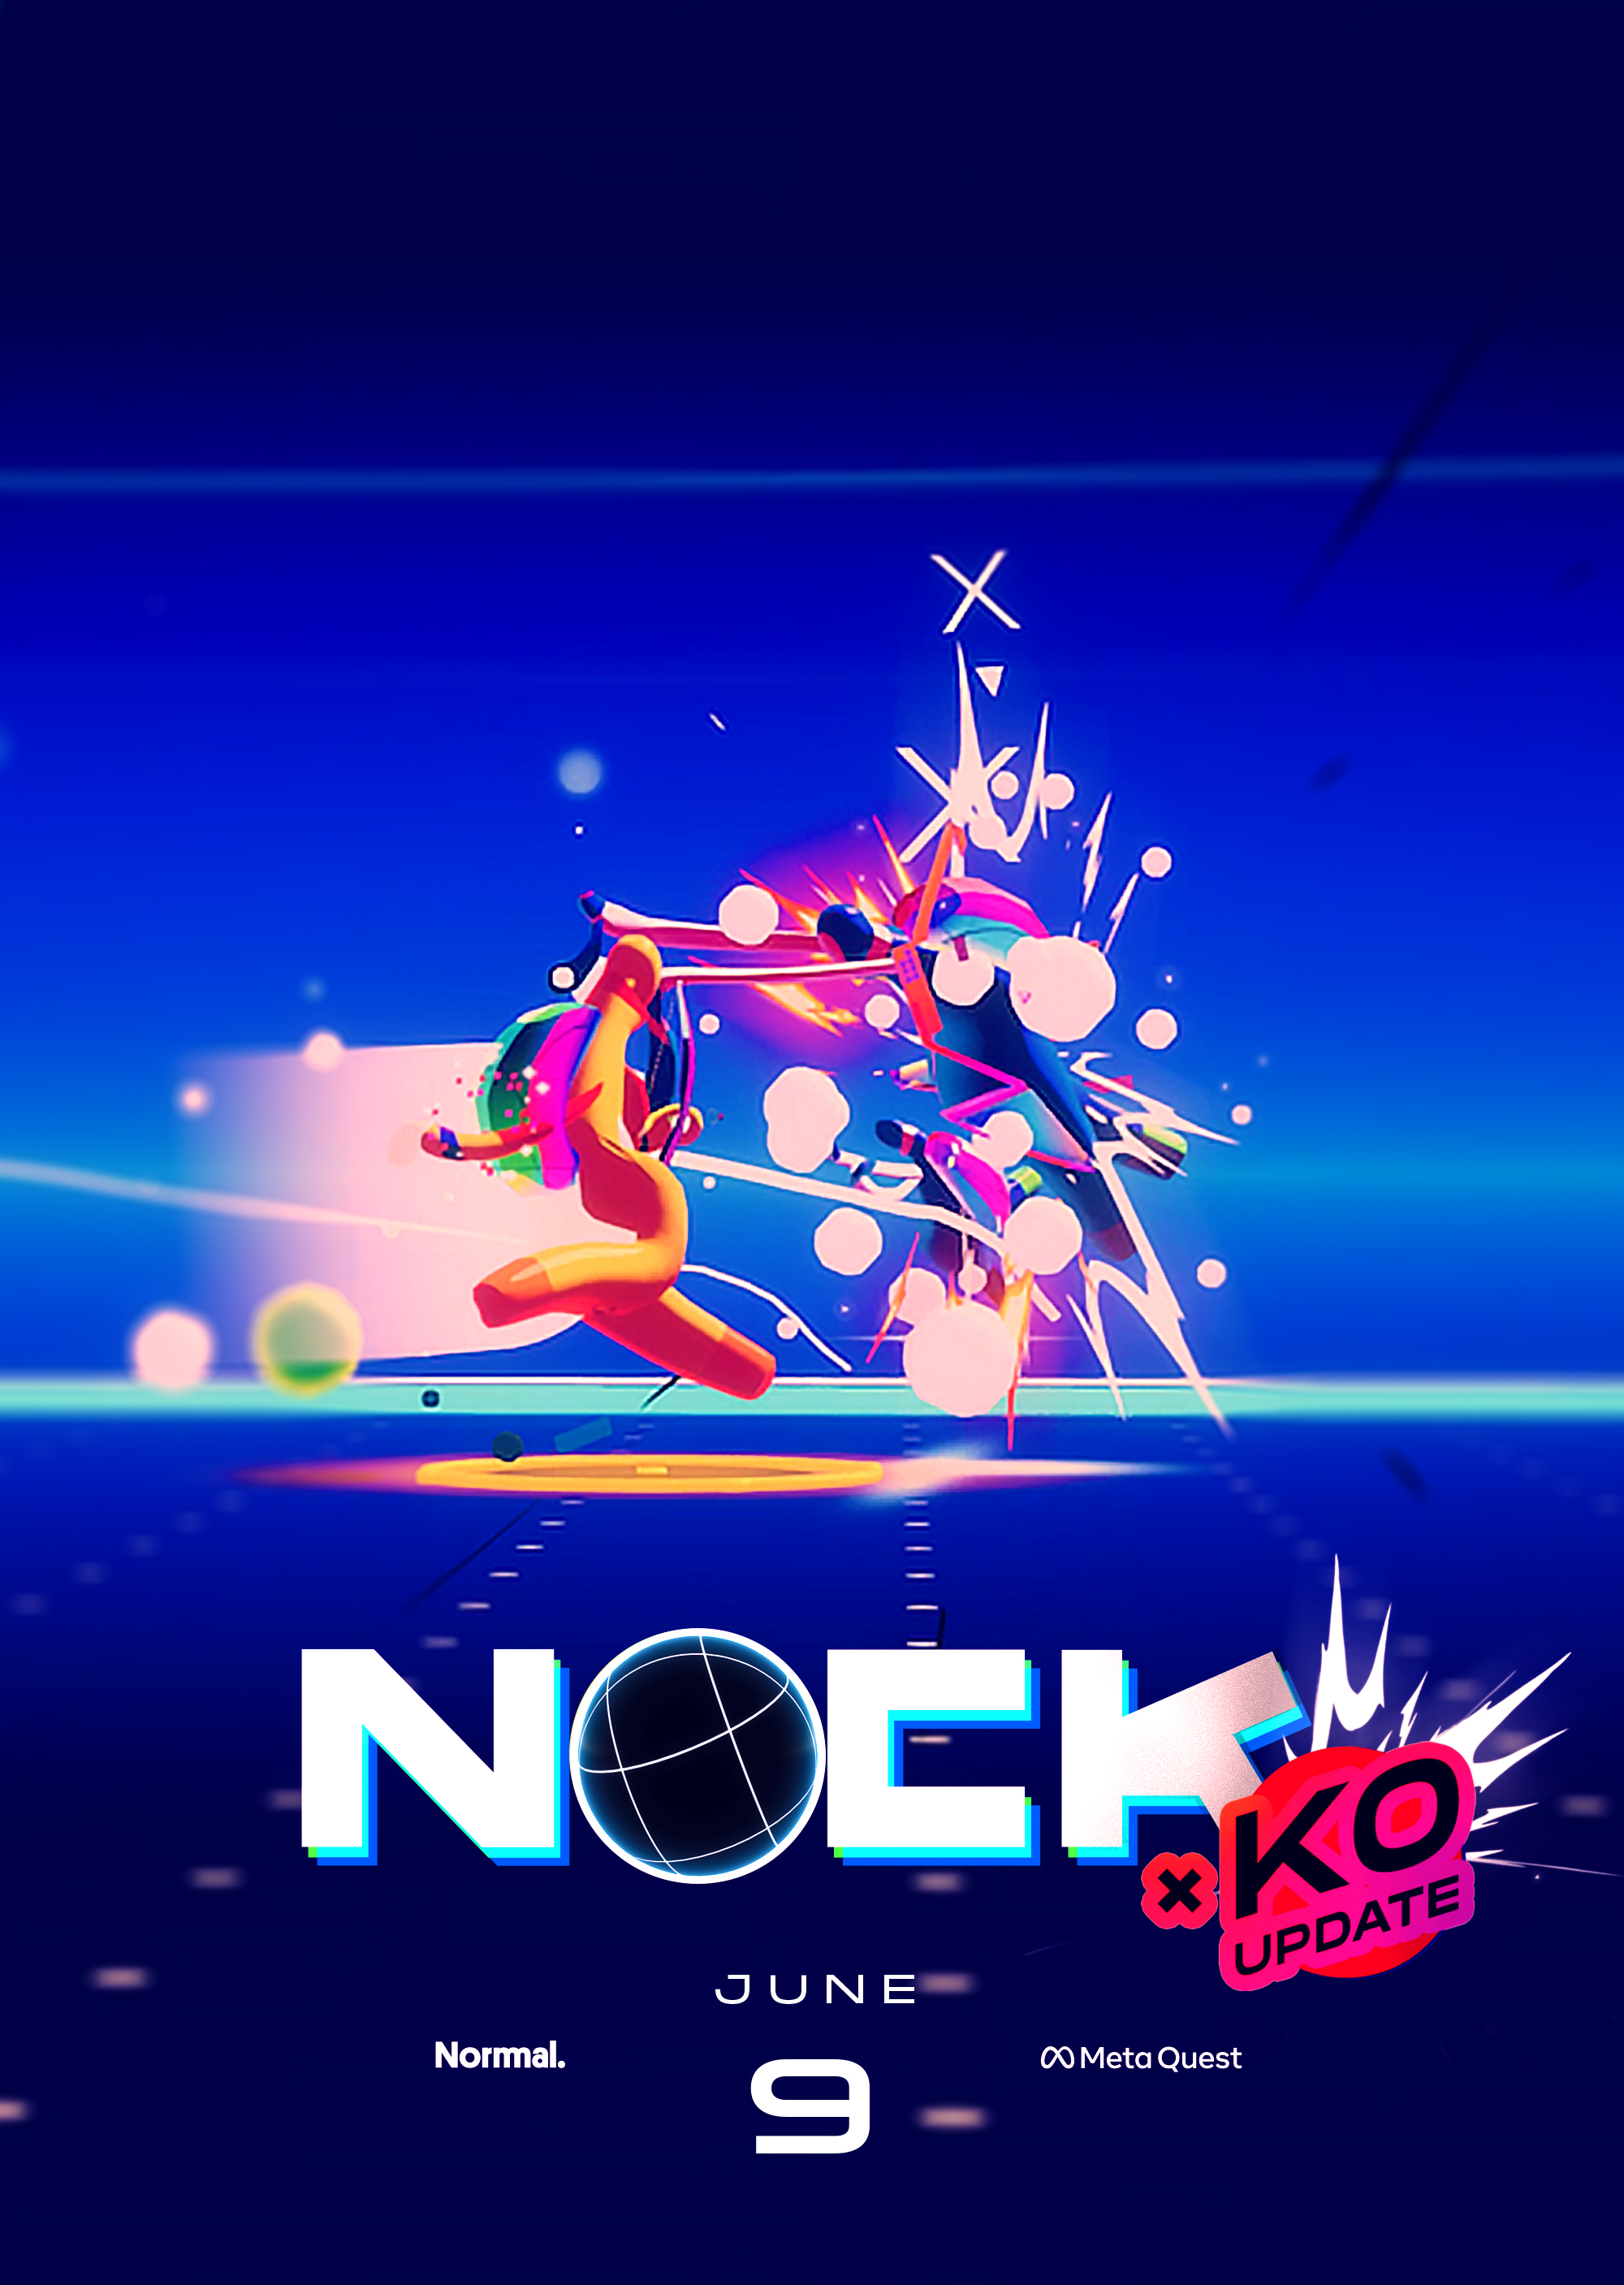 Nock - KO Update